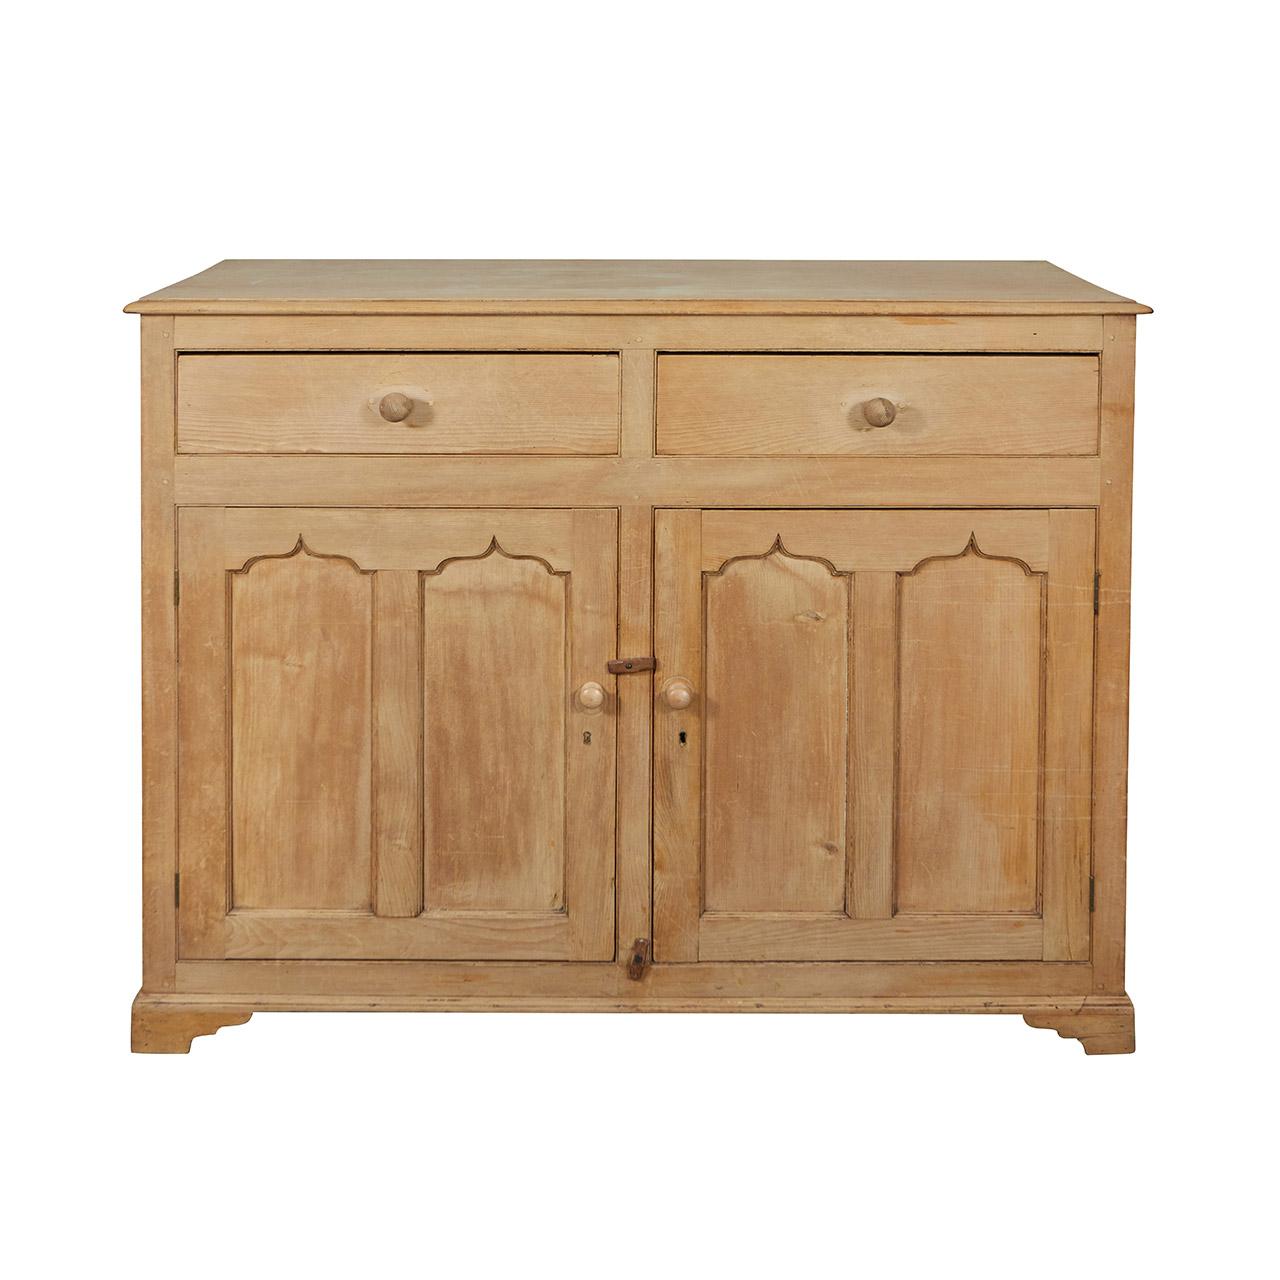 English Pine Cabinet or Cupboard